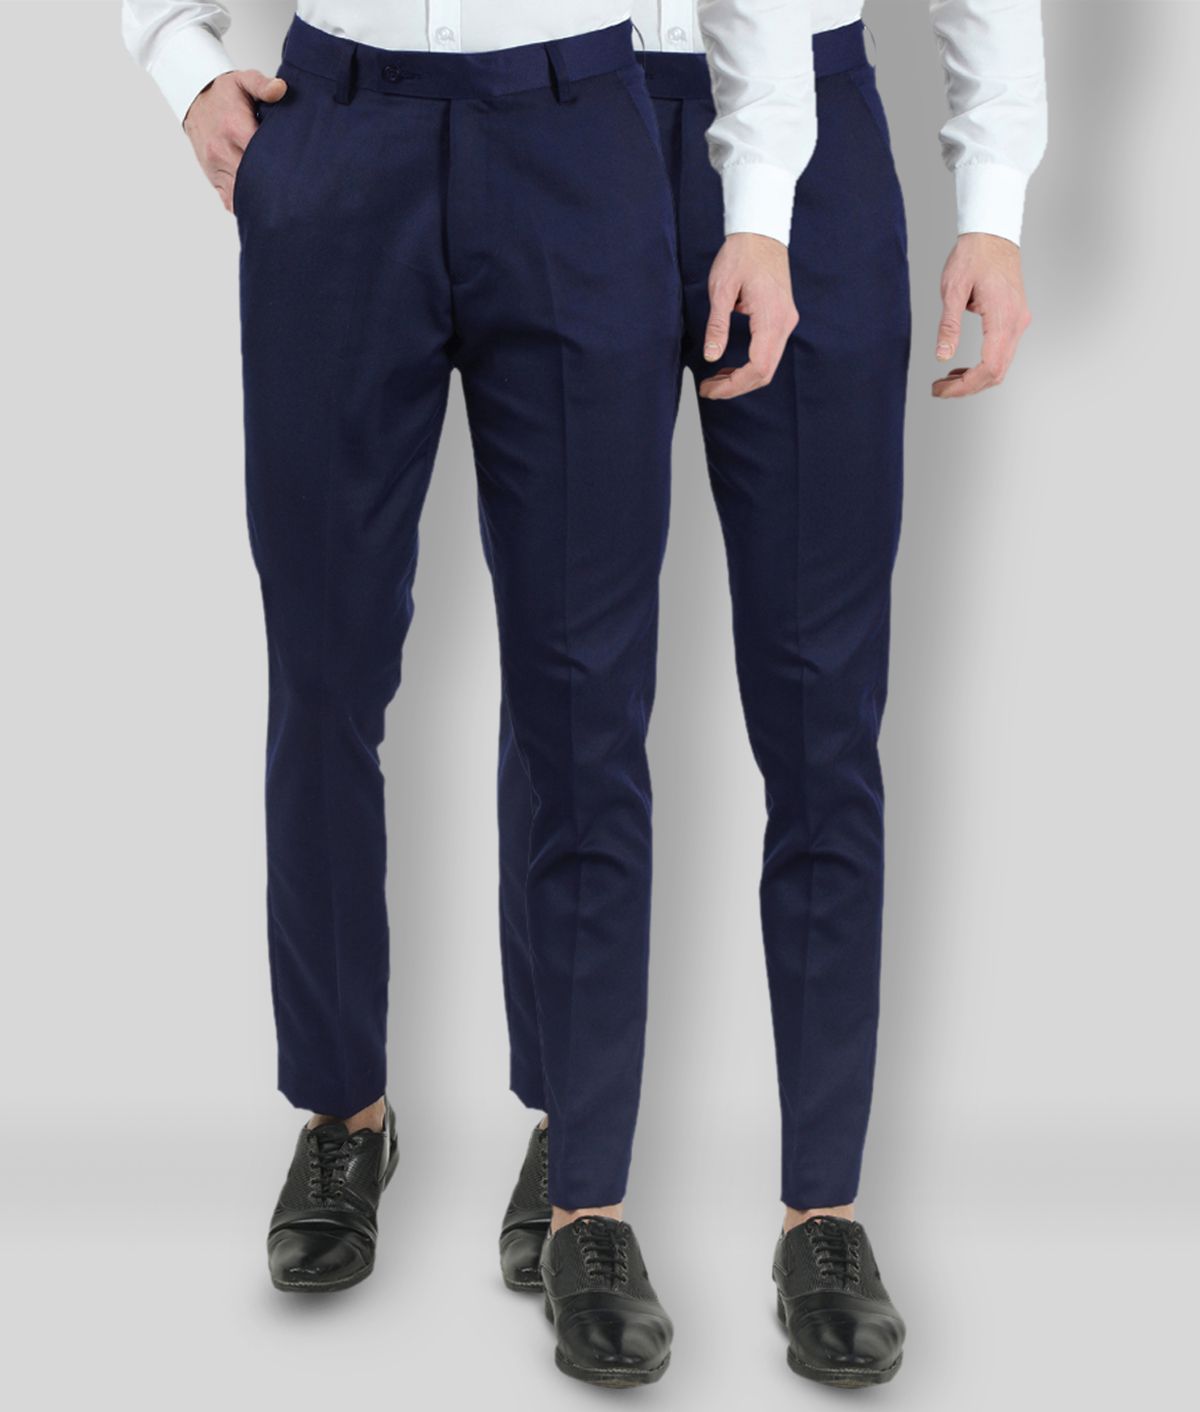 VEI SASTRE - Multicolored Polycotton Slim - Fit Men's Formal Pants ( Pack of 2 )